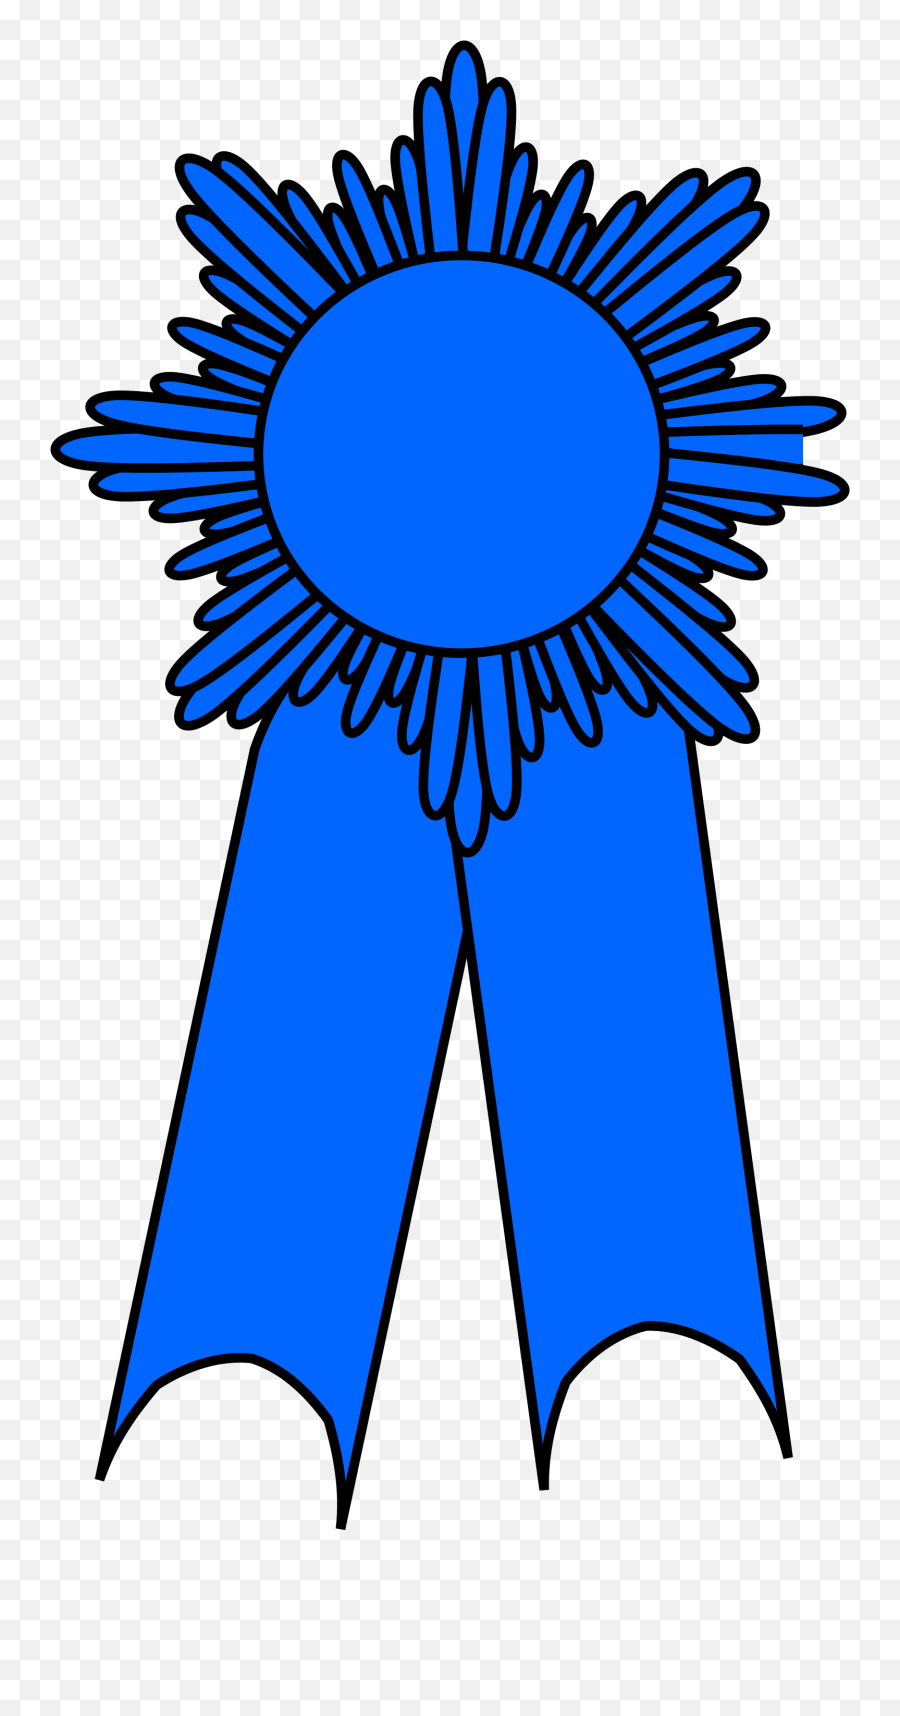 Blue Jay Png Svg Clip Art For Web - Download Clip Art Png Transparent Clip Art Gold Award Ribbon,Blue Jay Png